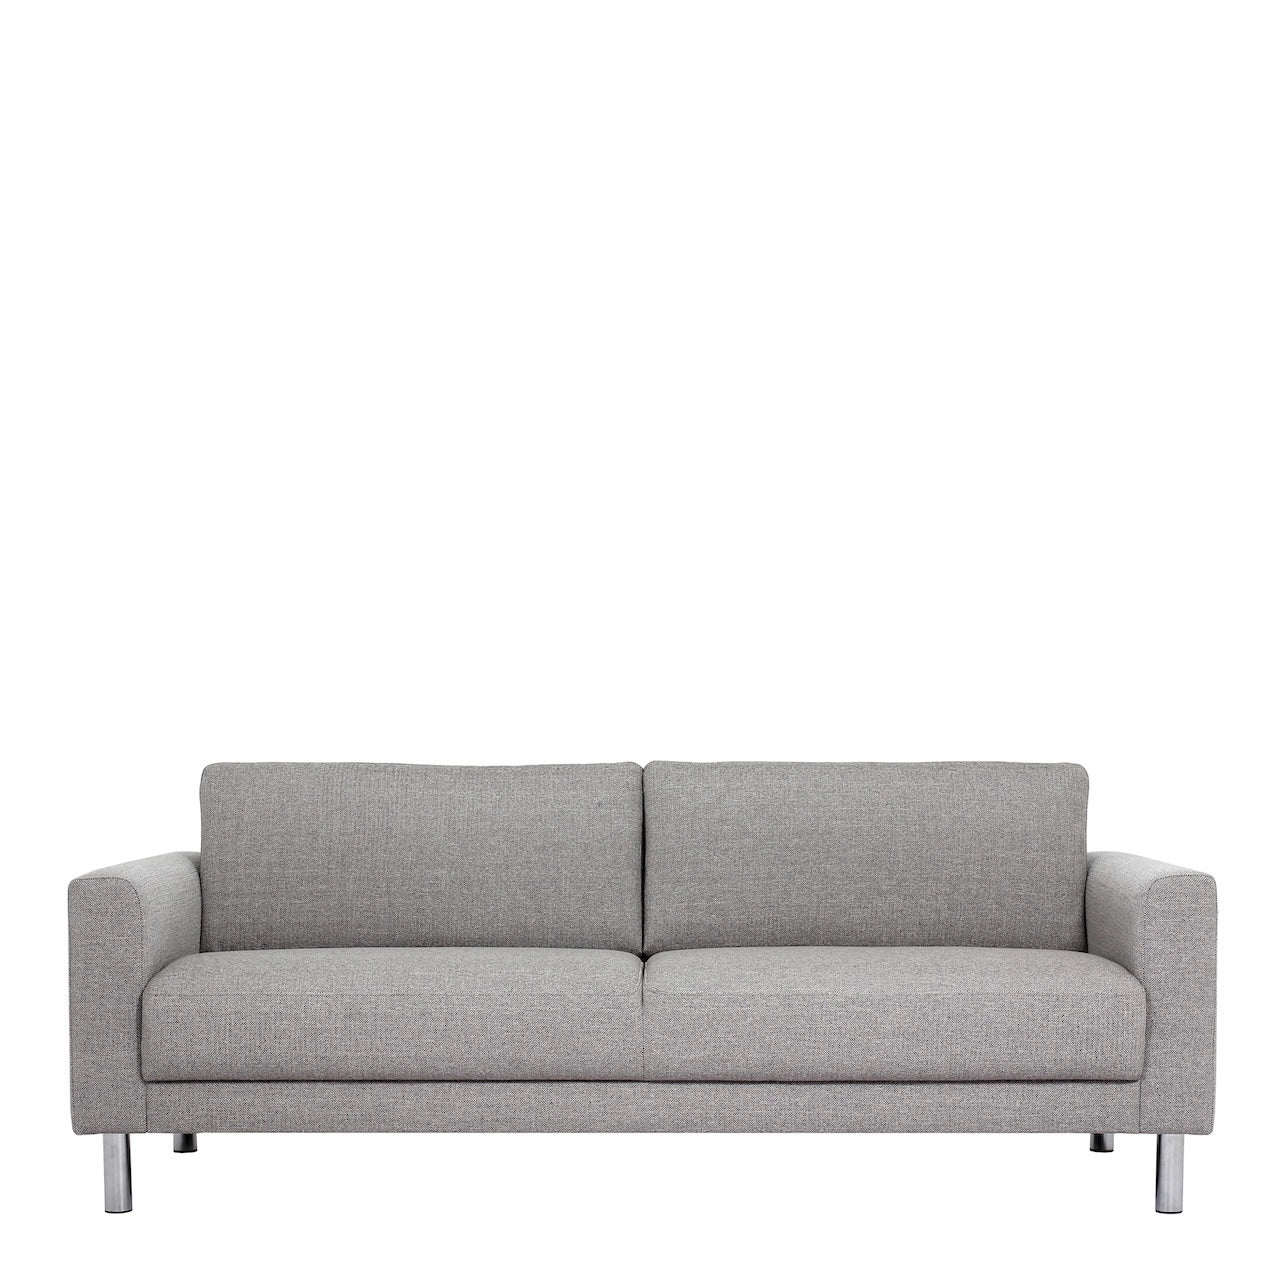 Furniture To Go Cleveland 3-Seater Sofa in Nova Light Grey